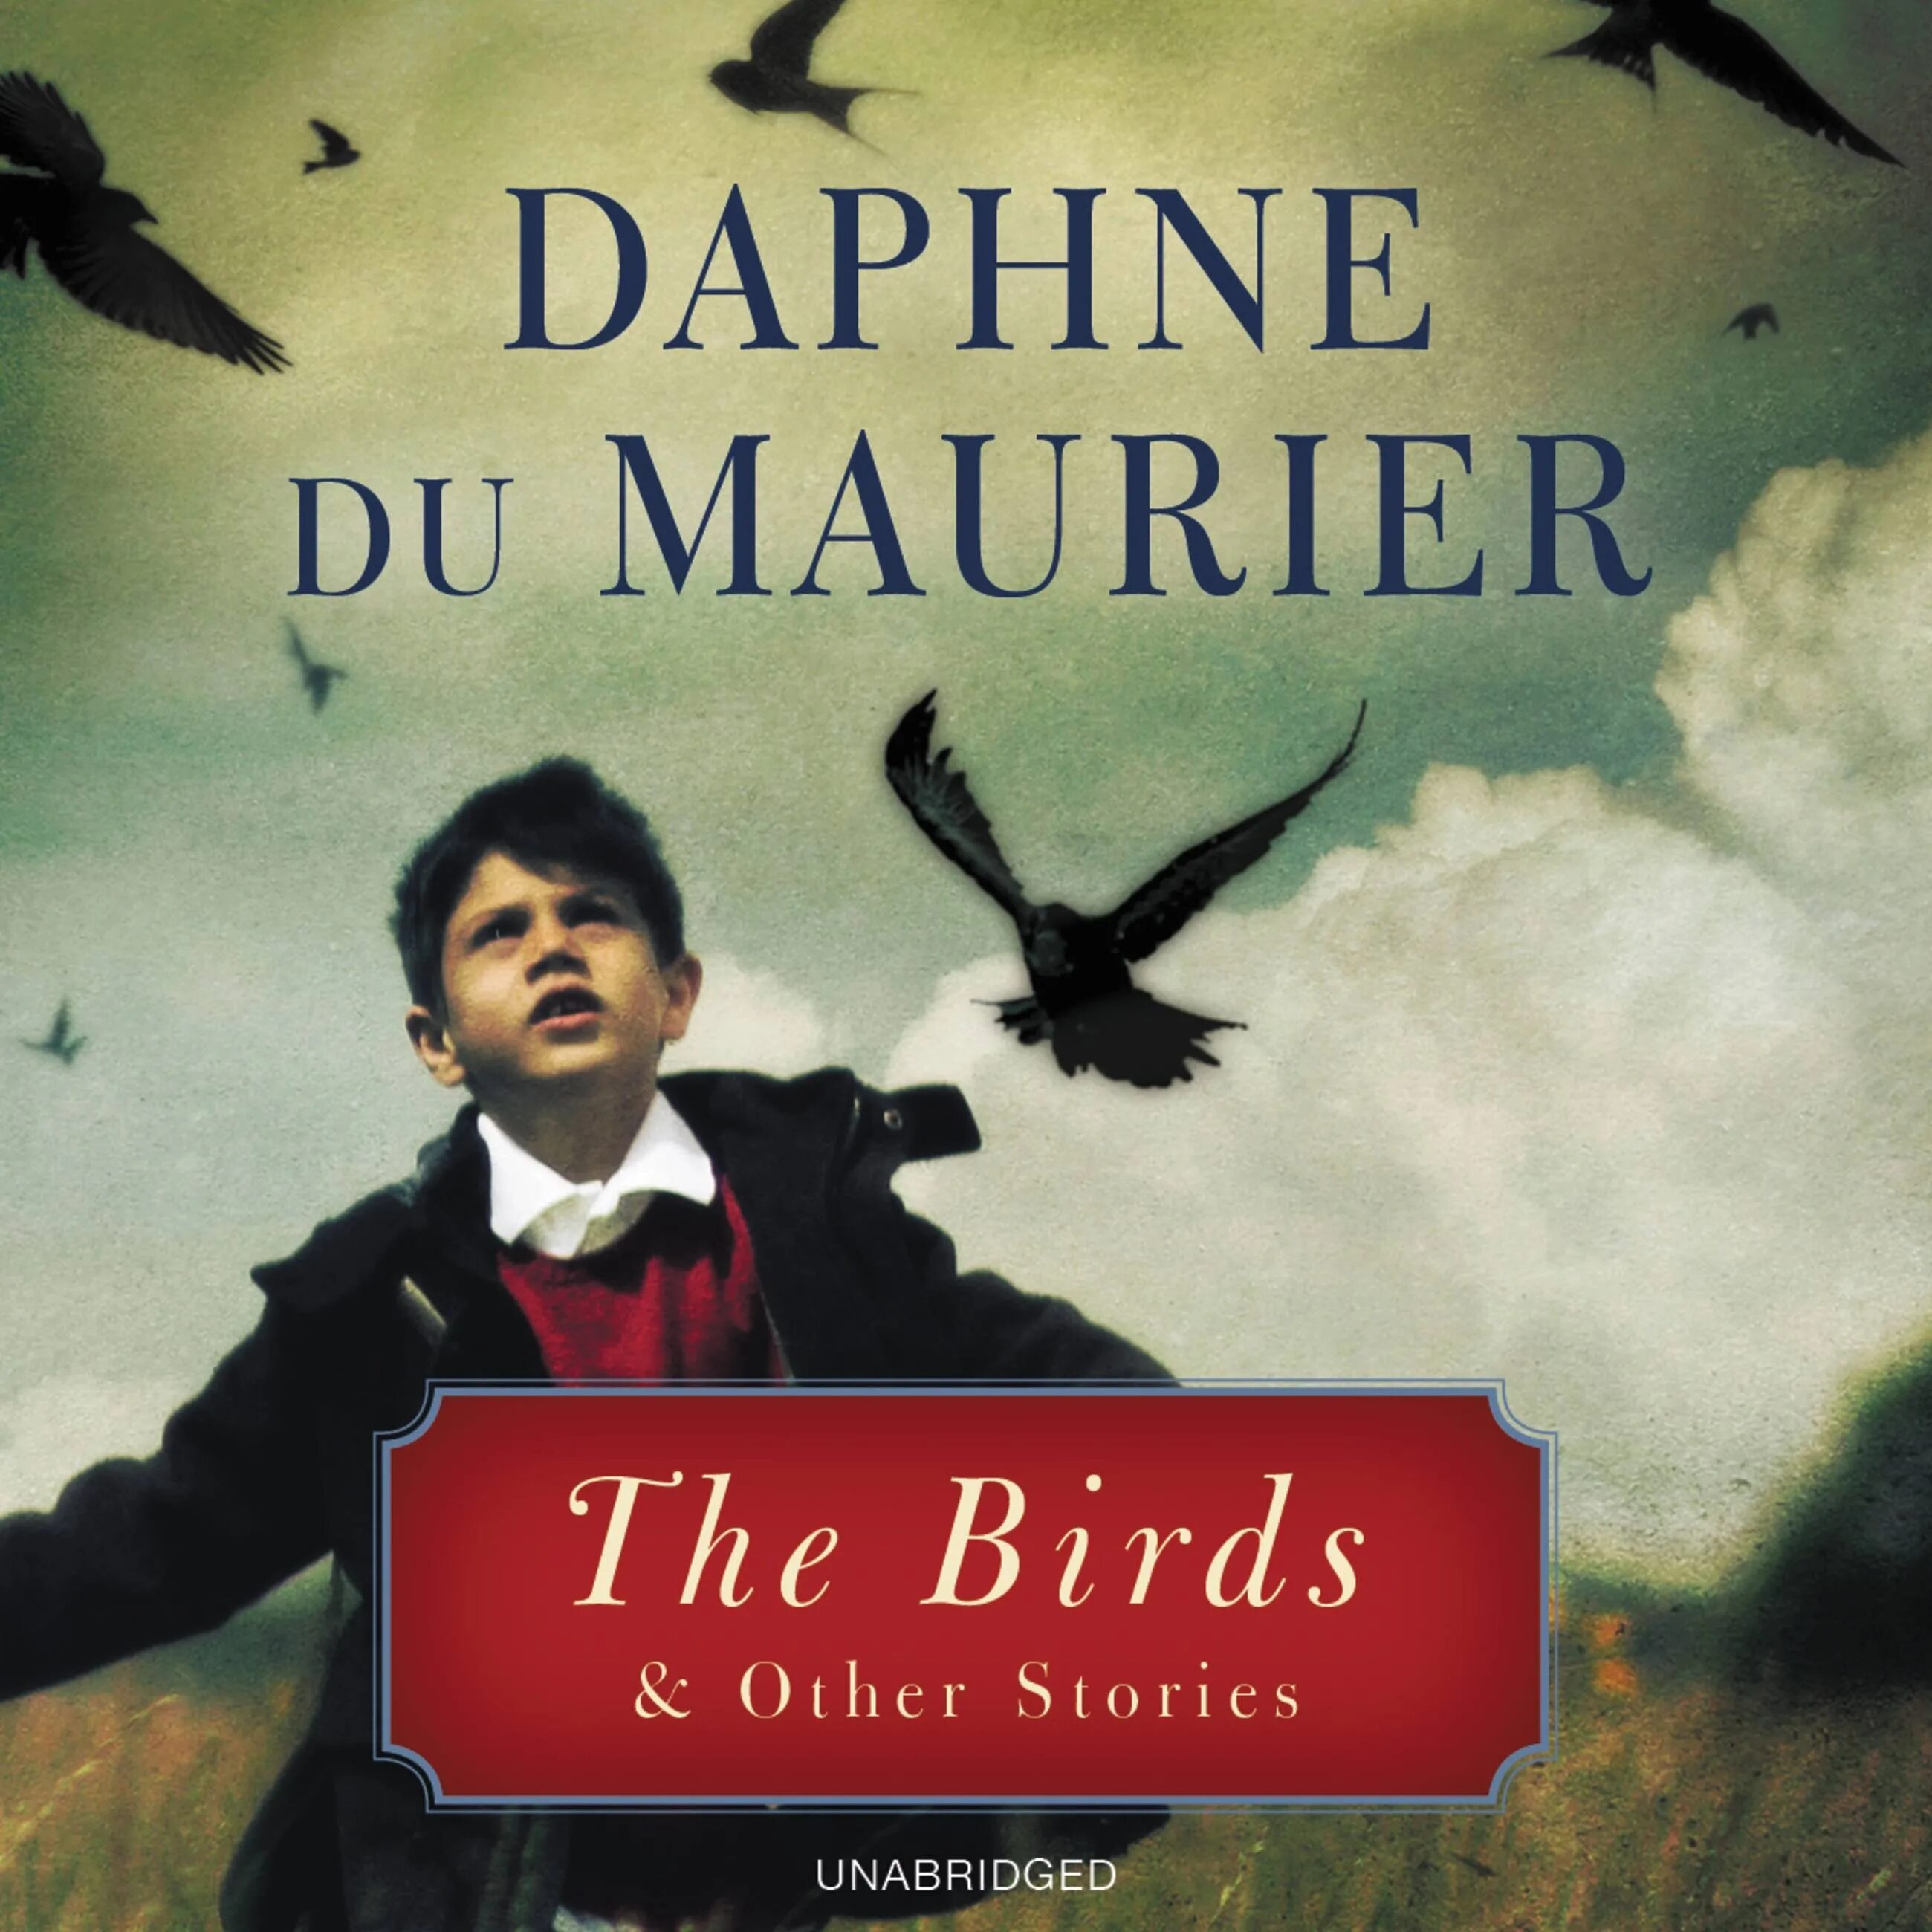 Дюморье птицы. The Birds Daphne du Maurier. Дафна дю Морье птицы. Птицы Дафна дю Морье книга. The Birds рассказ.